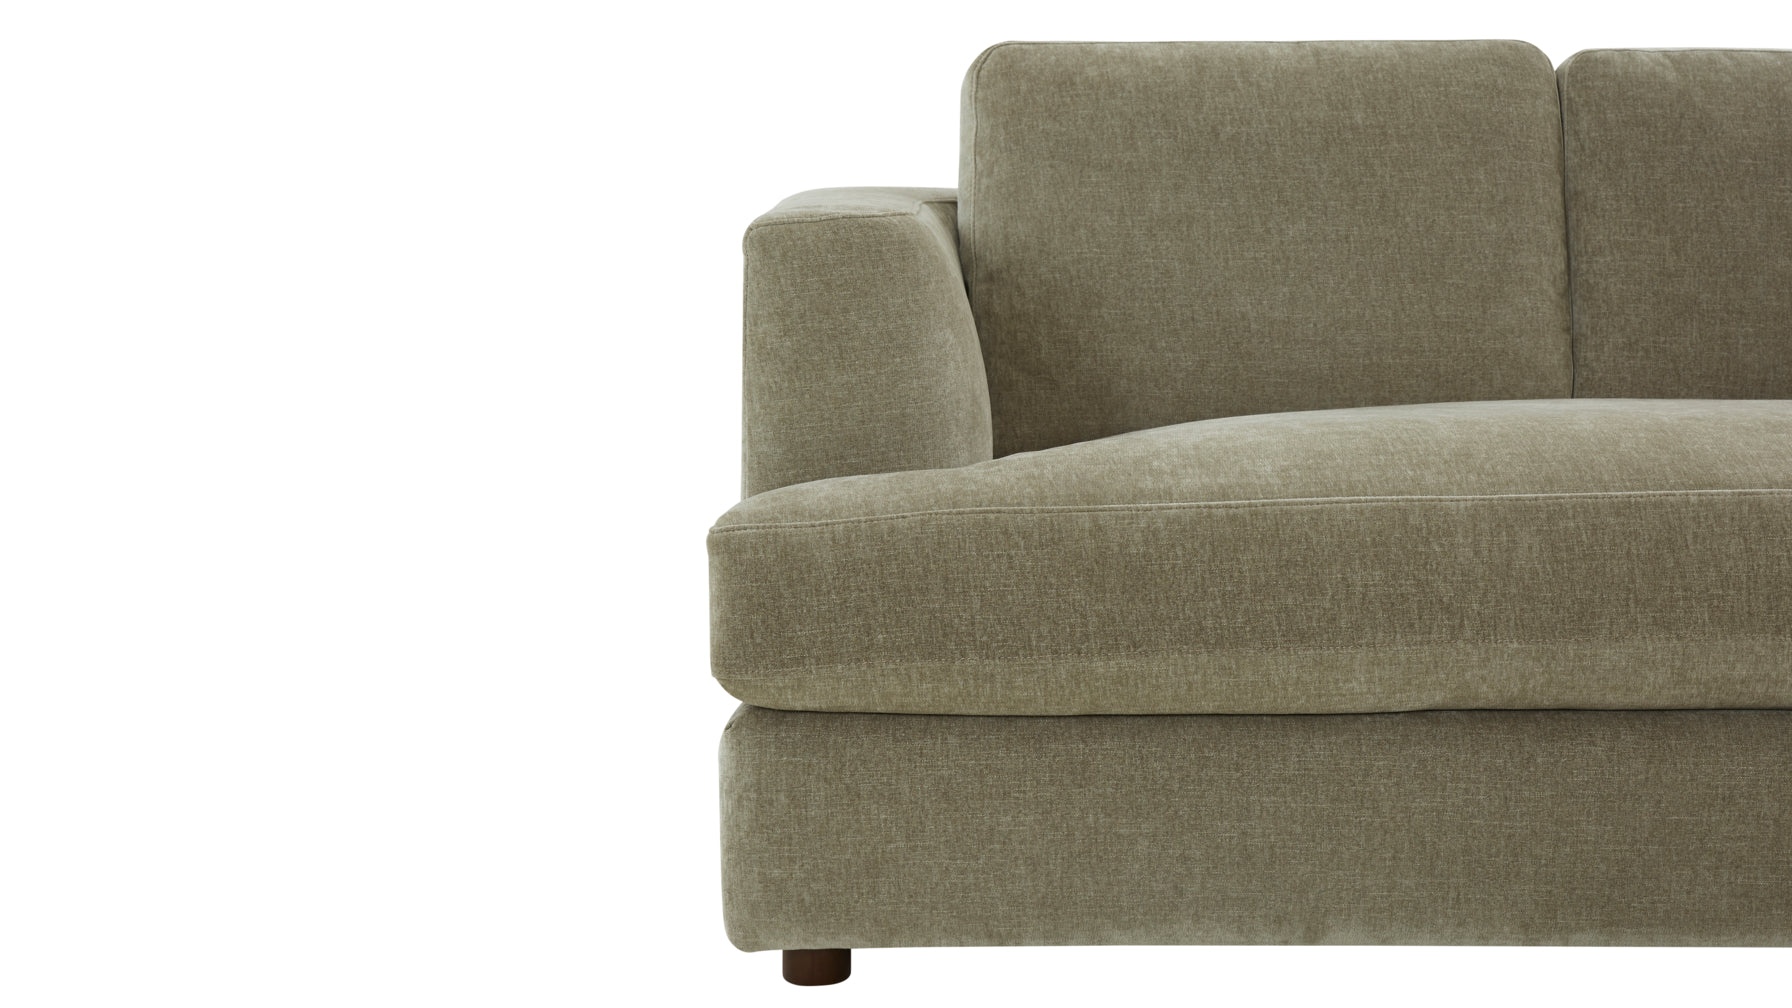 Good Company Sofa, 2 Seater, Artichoke - Image 7